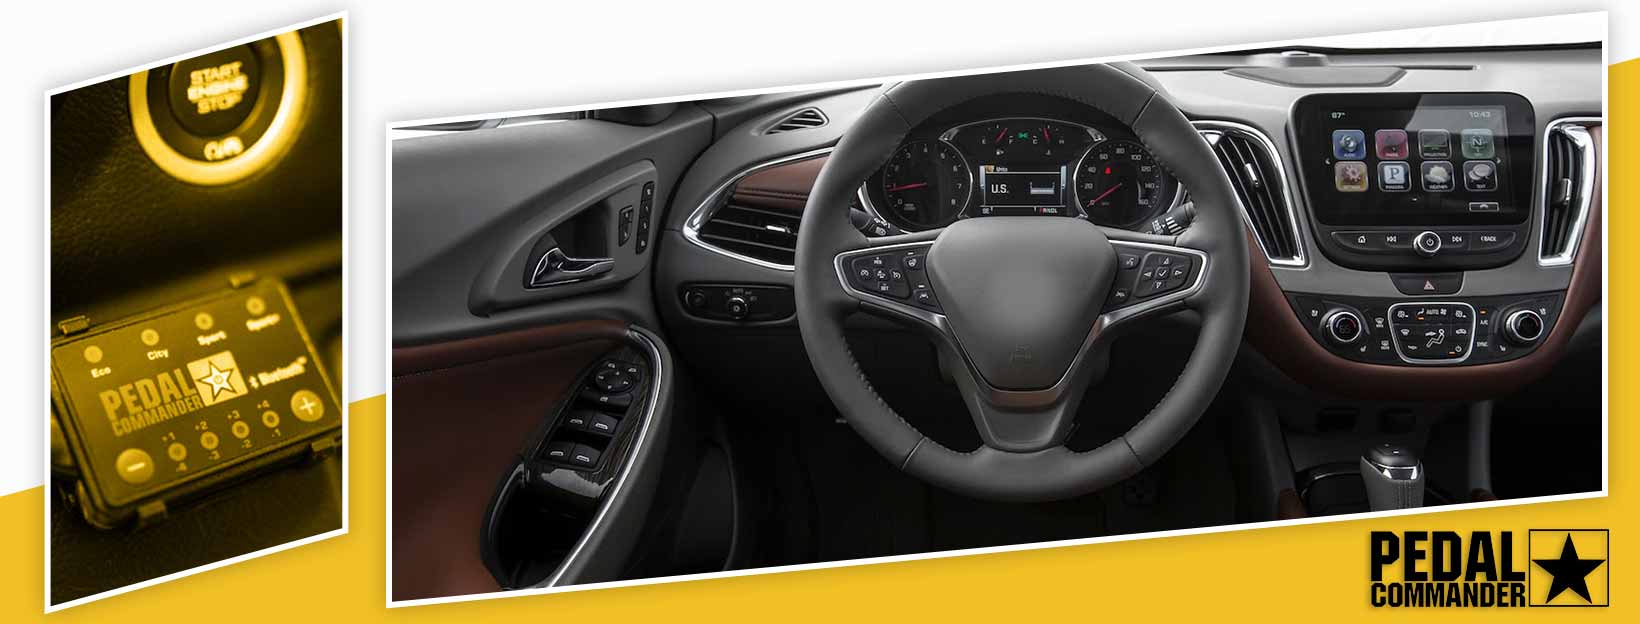 Pedal Commander for Chevrolet Malibu Limited - interior